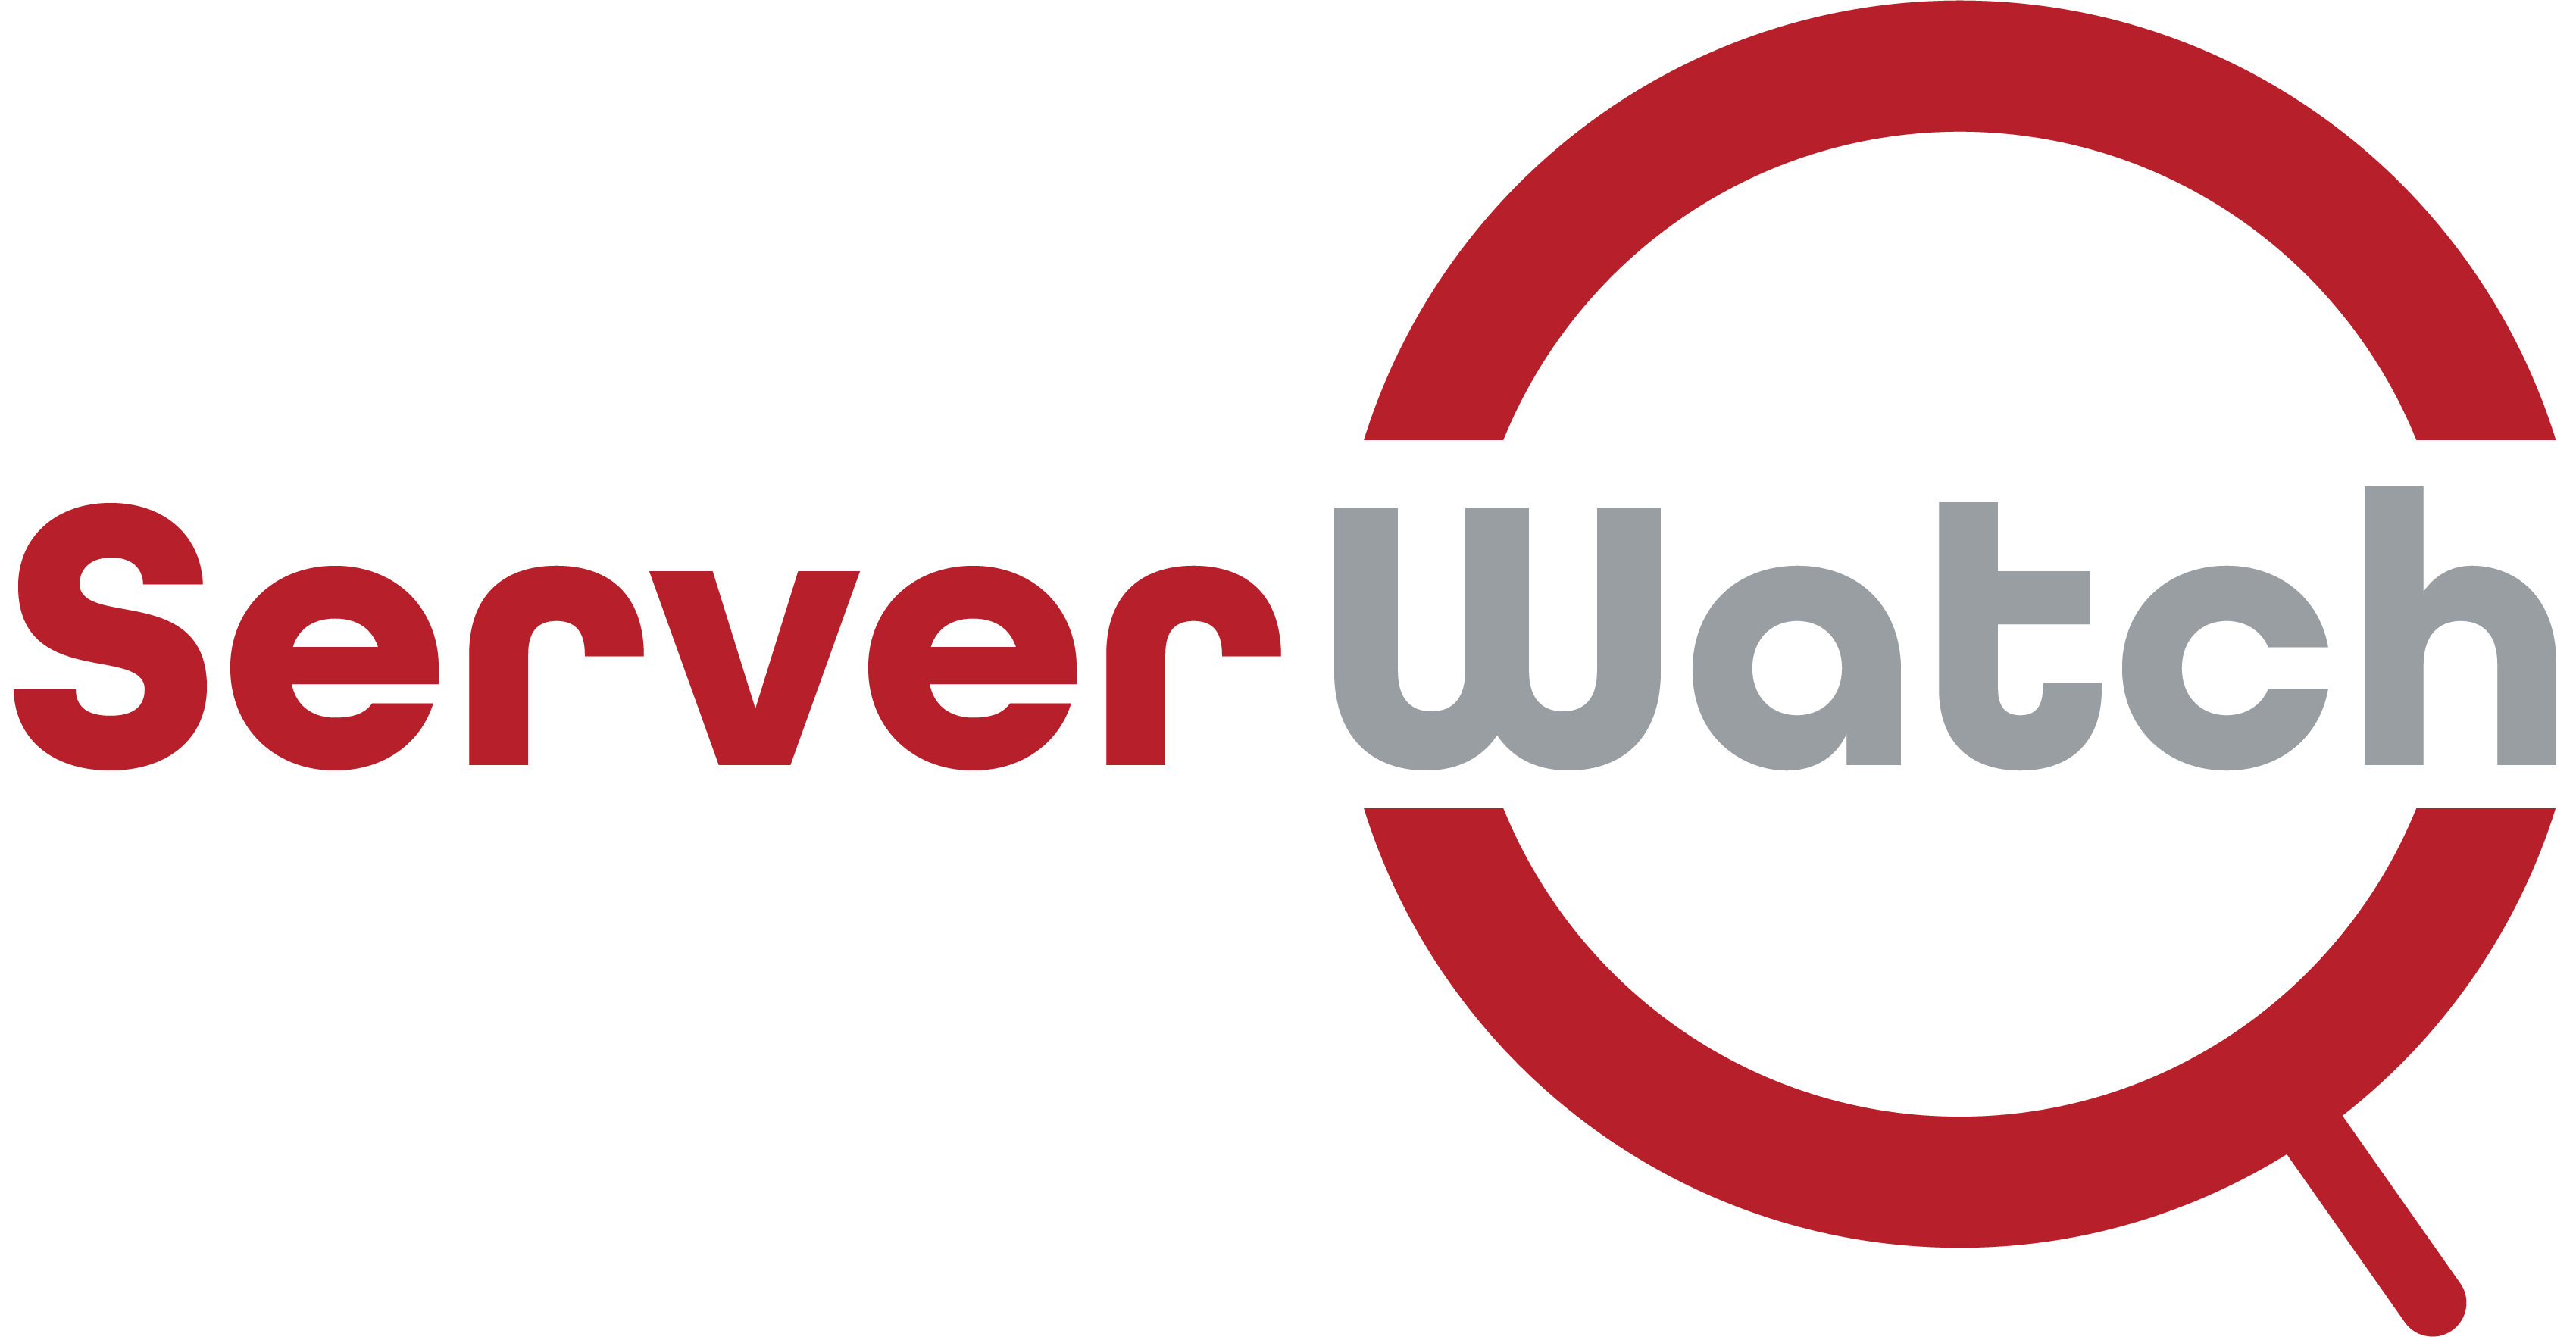 ServerWatch logo